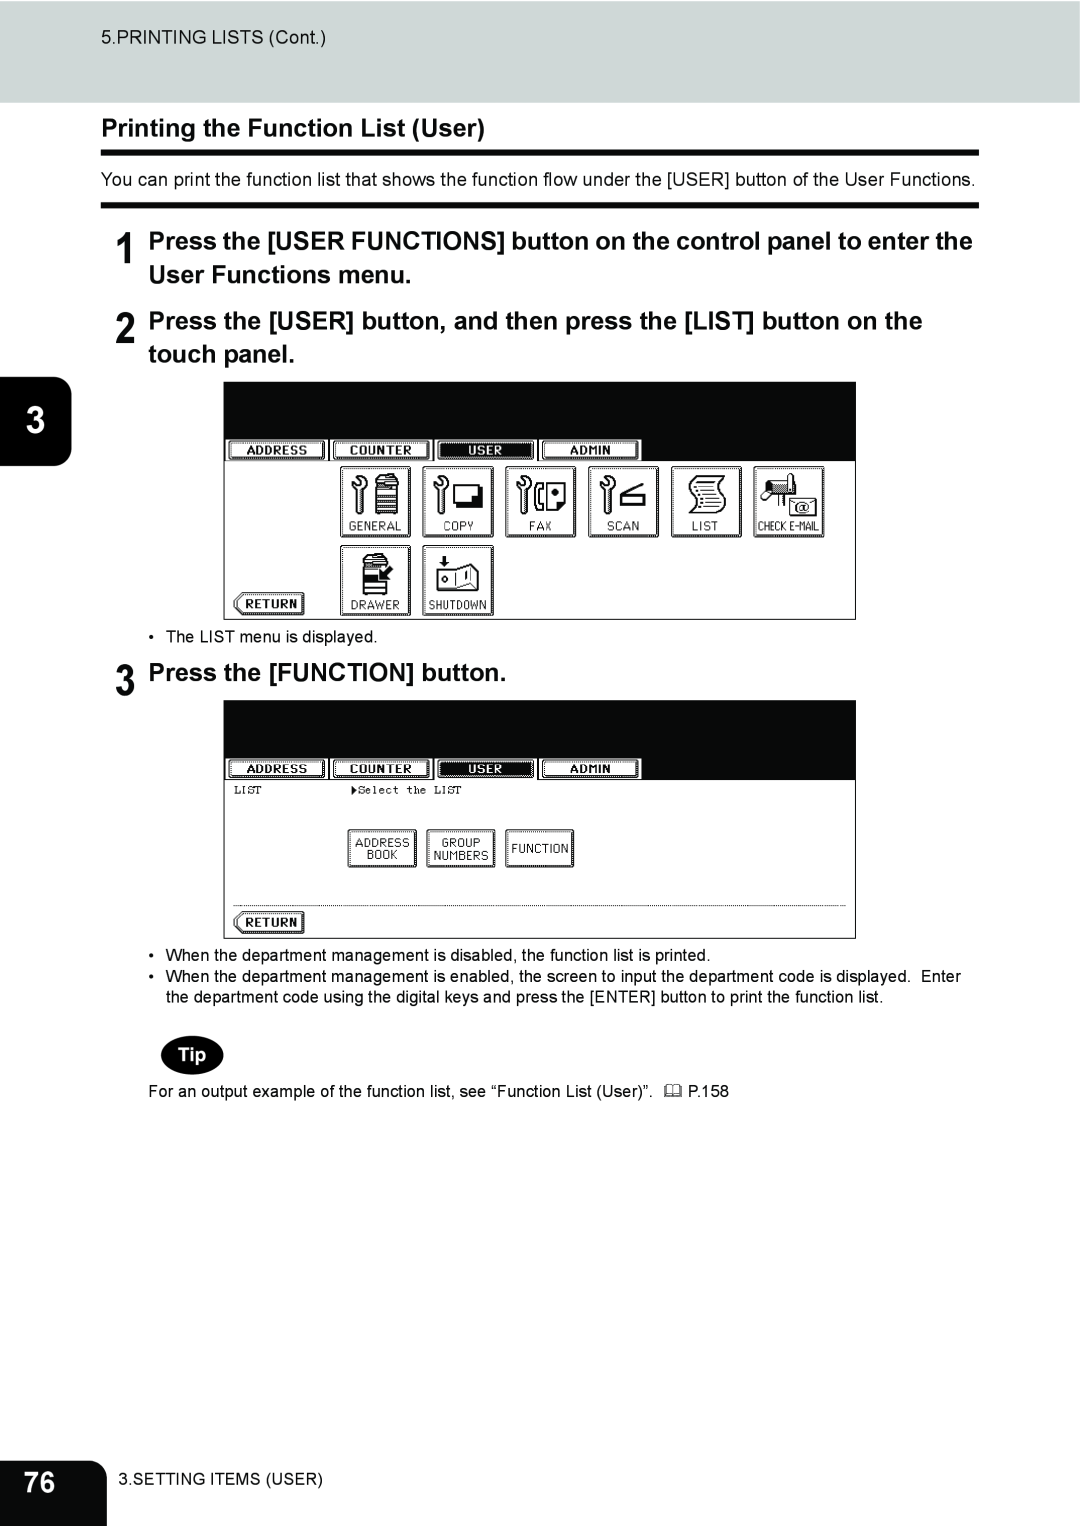 Toshiba 232, 282, 202L manual Printing the Function List User, Press the FUNCTION button, PRINTING LISTS Cont 